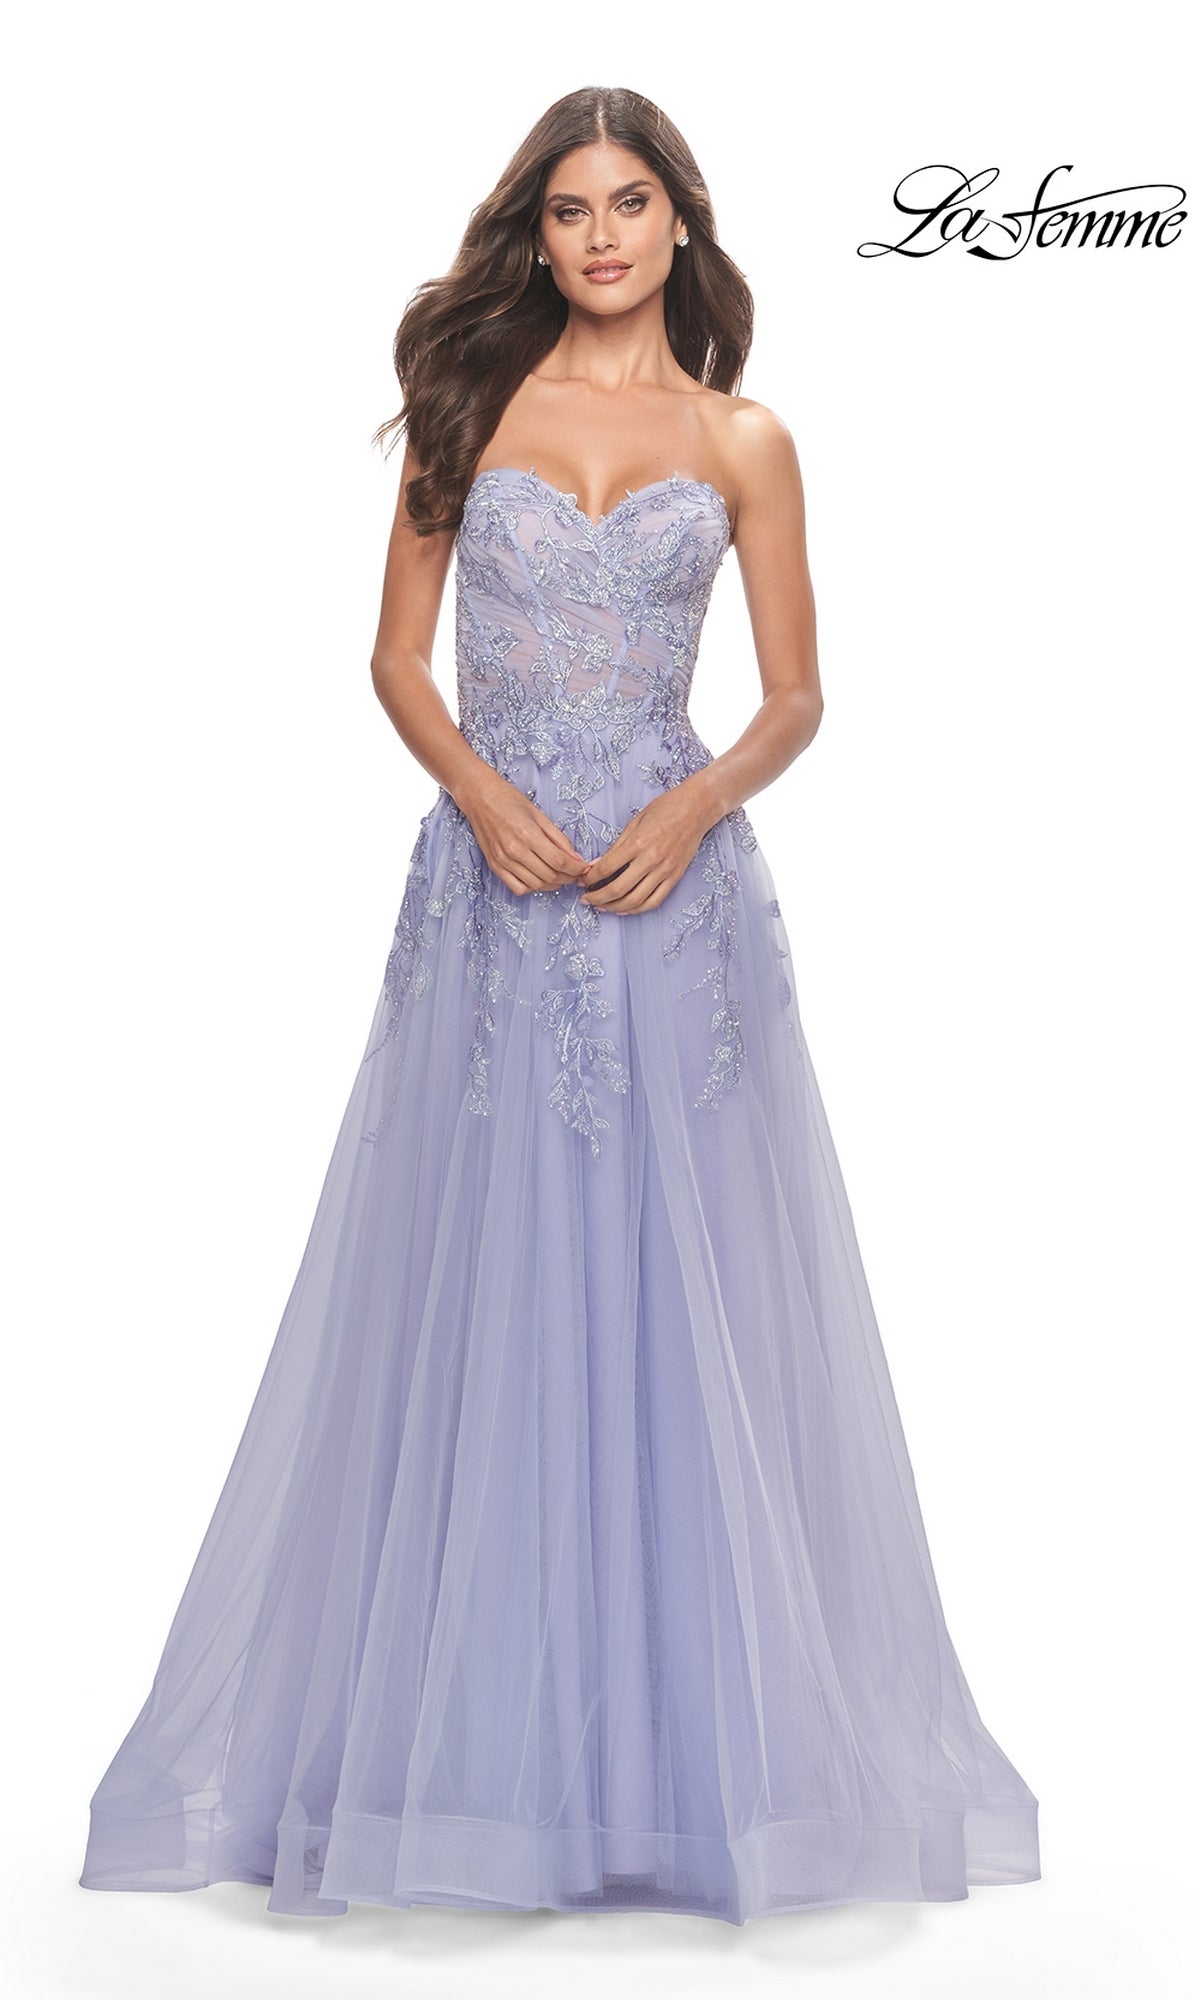  La Femme 31363 Formal Prom Dress